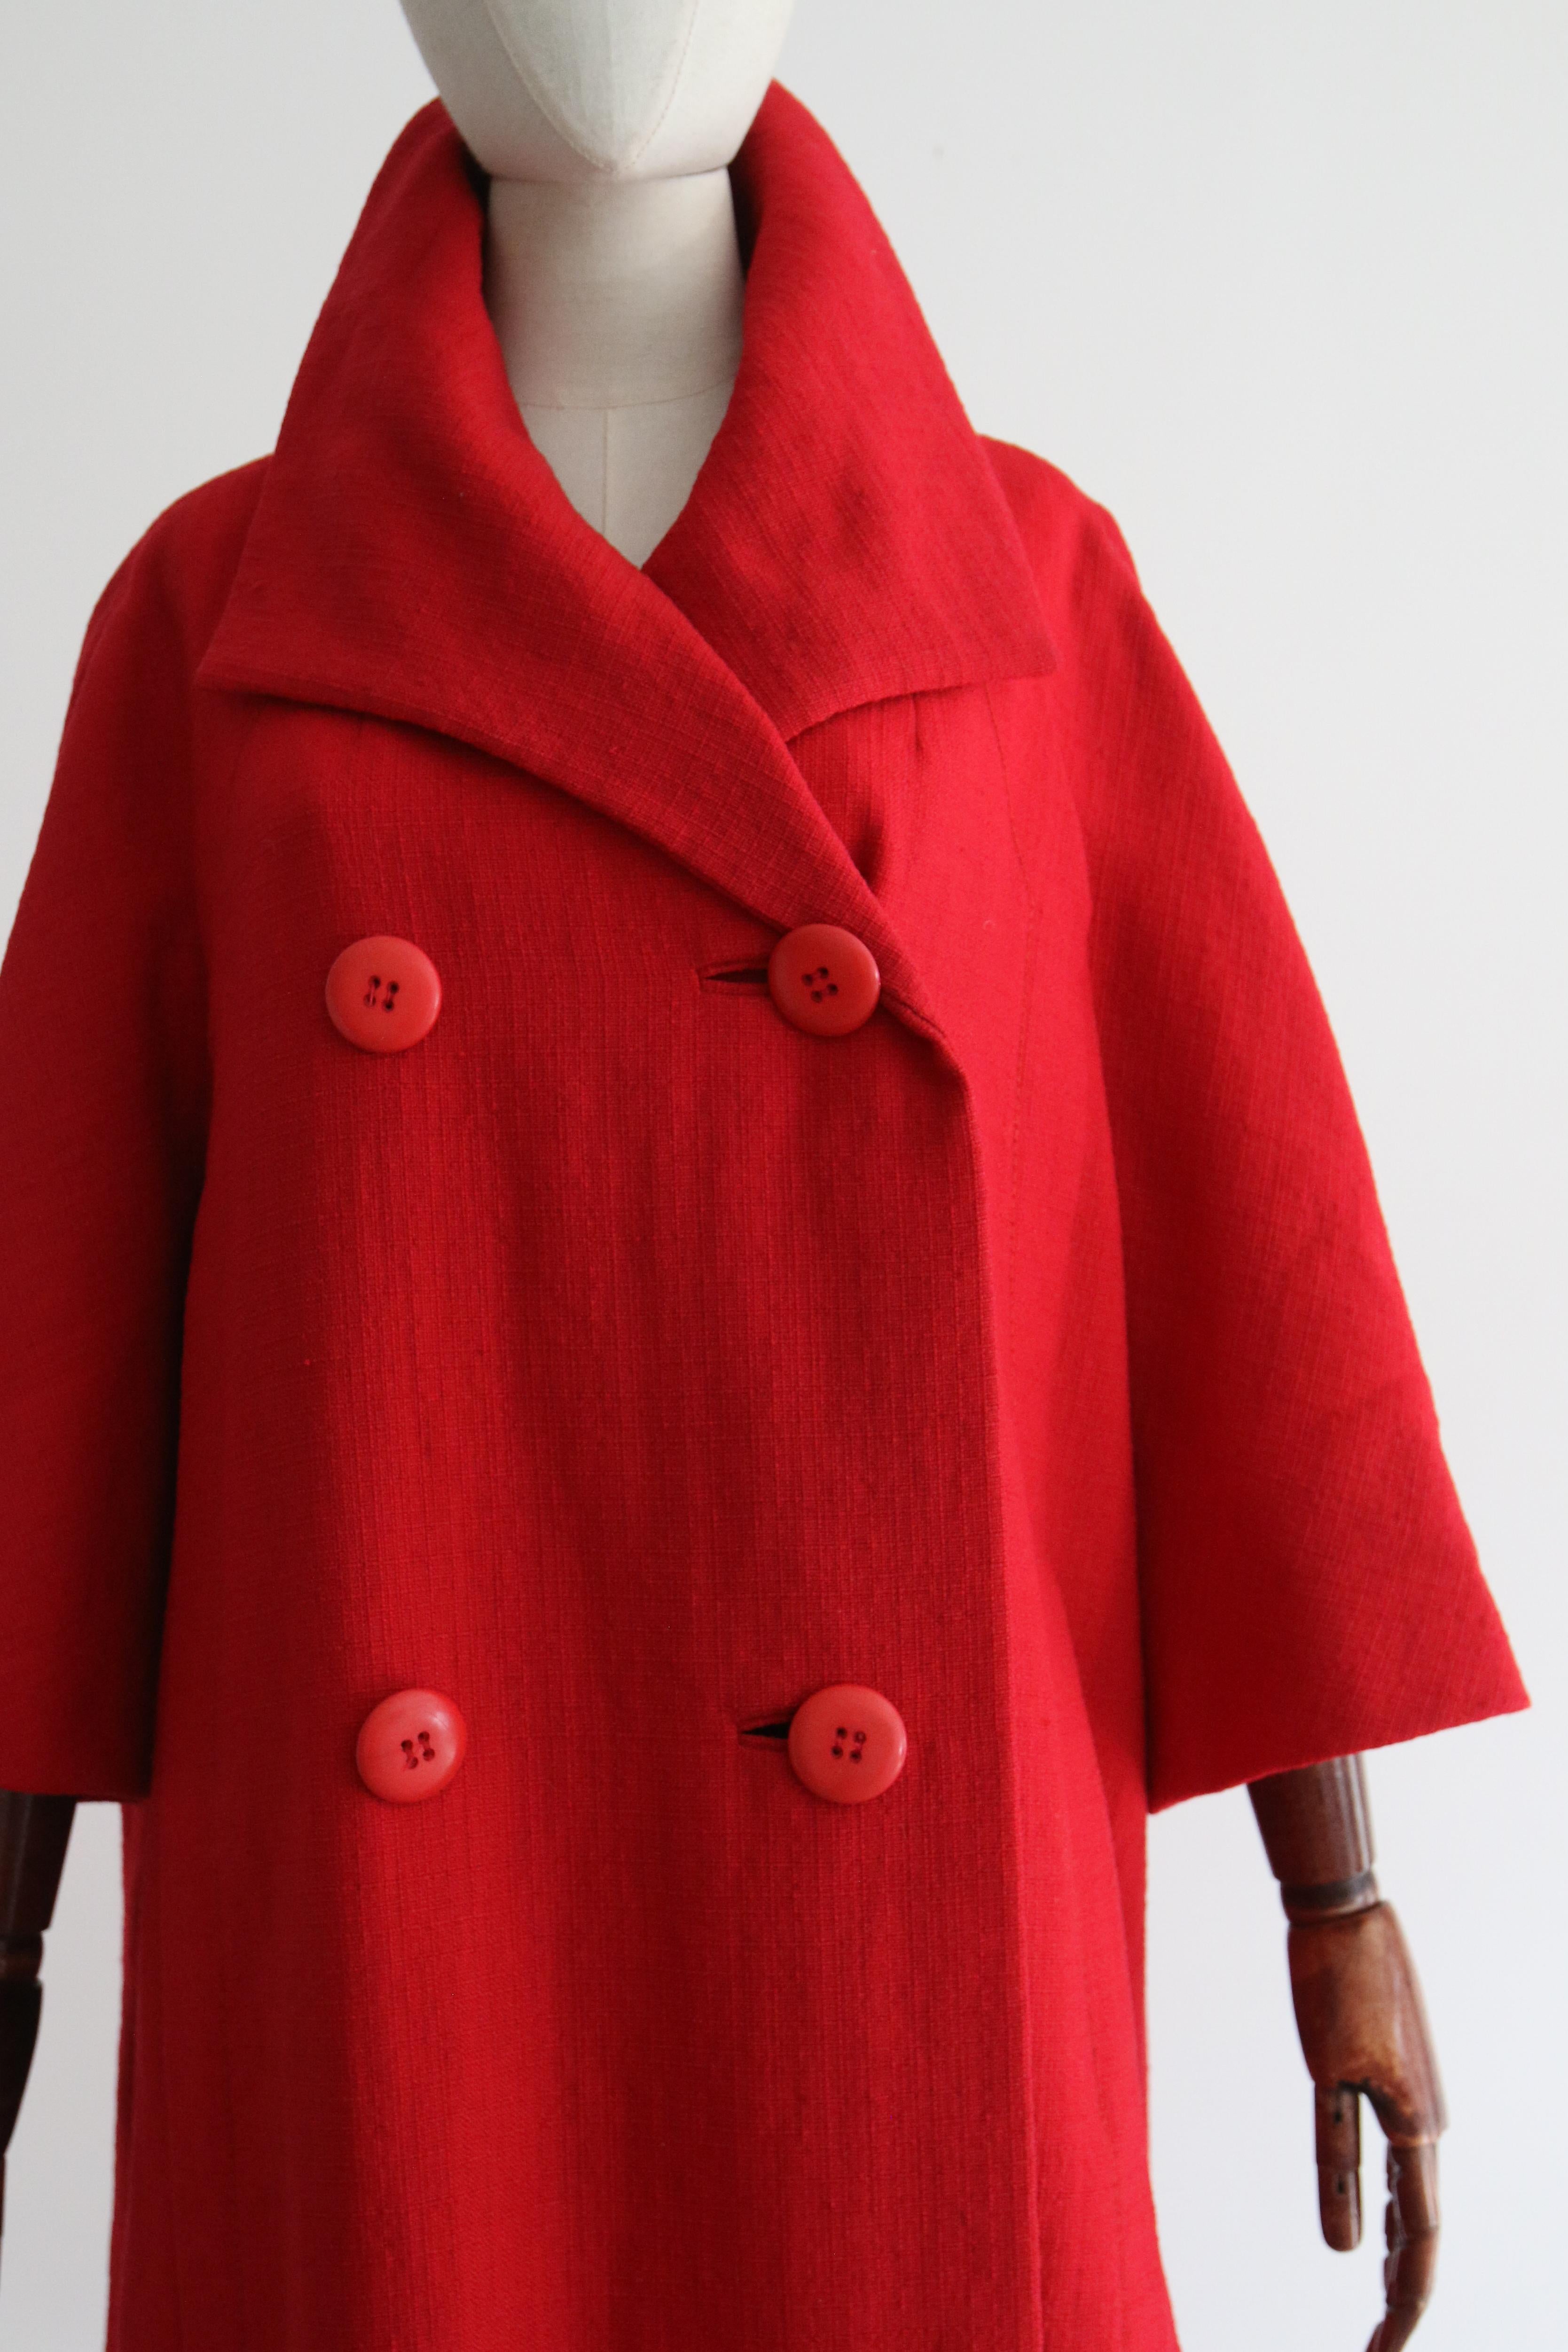 Red Vintage 1960's Christian Dior Wool Coat UK 14-18 US 10-14 For Sale